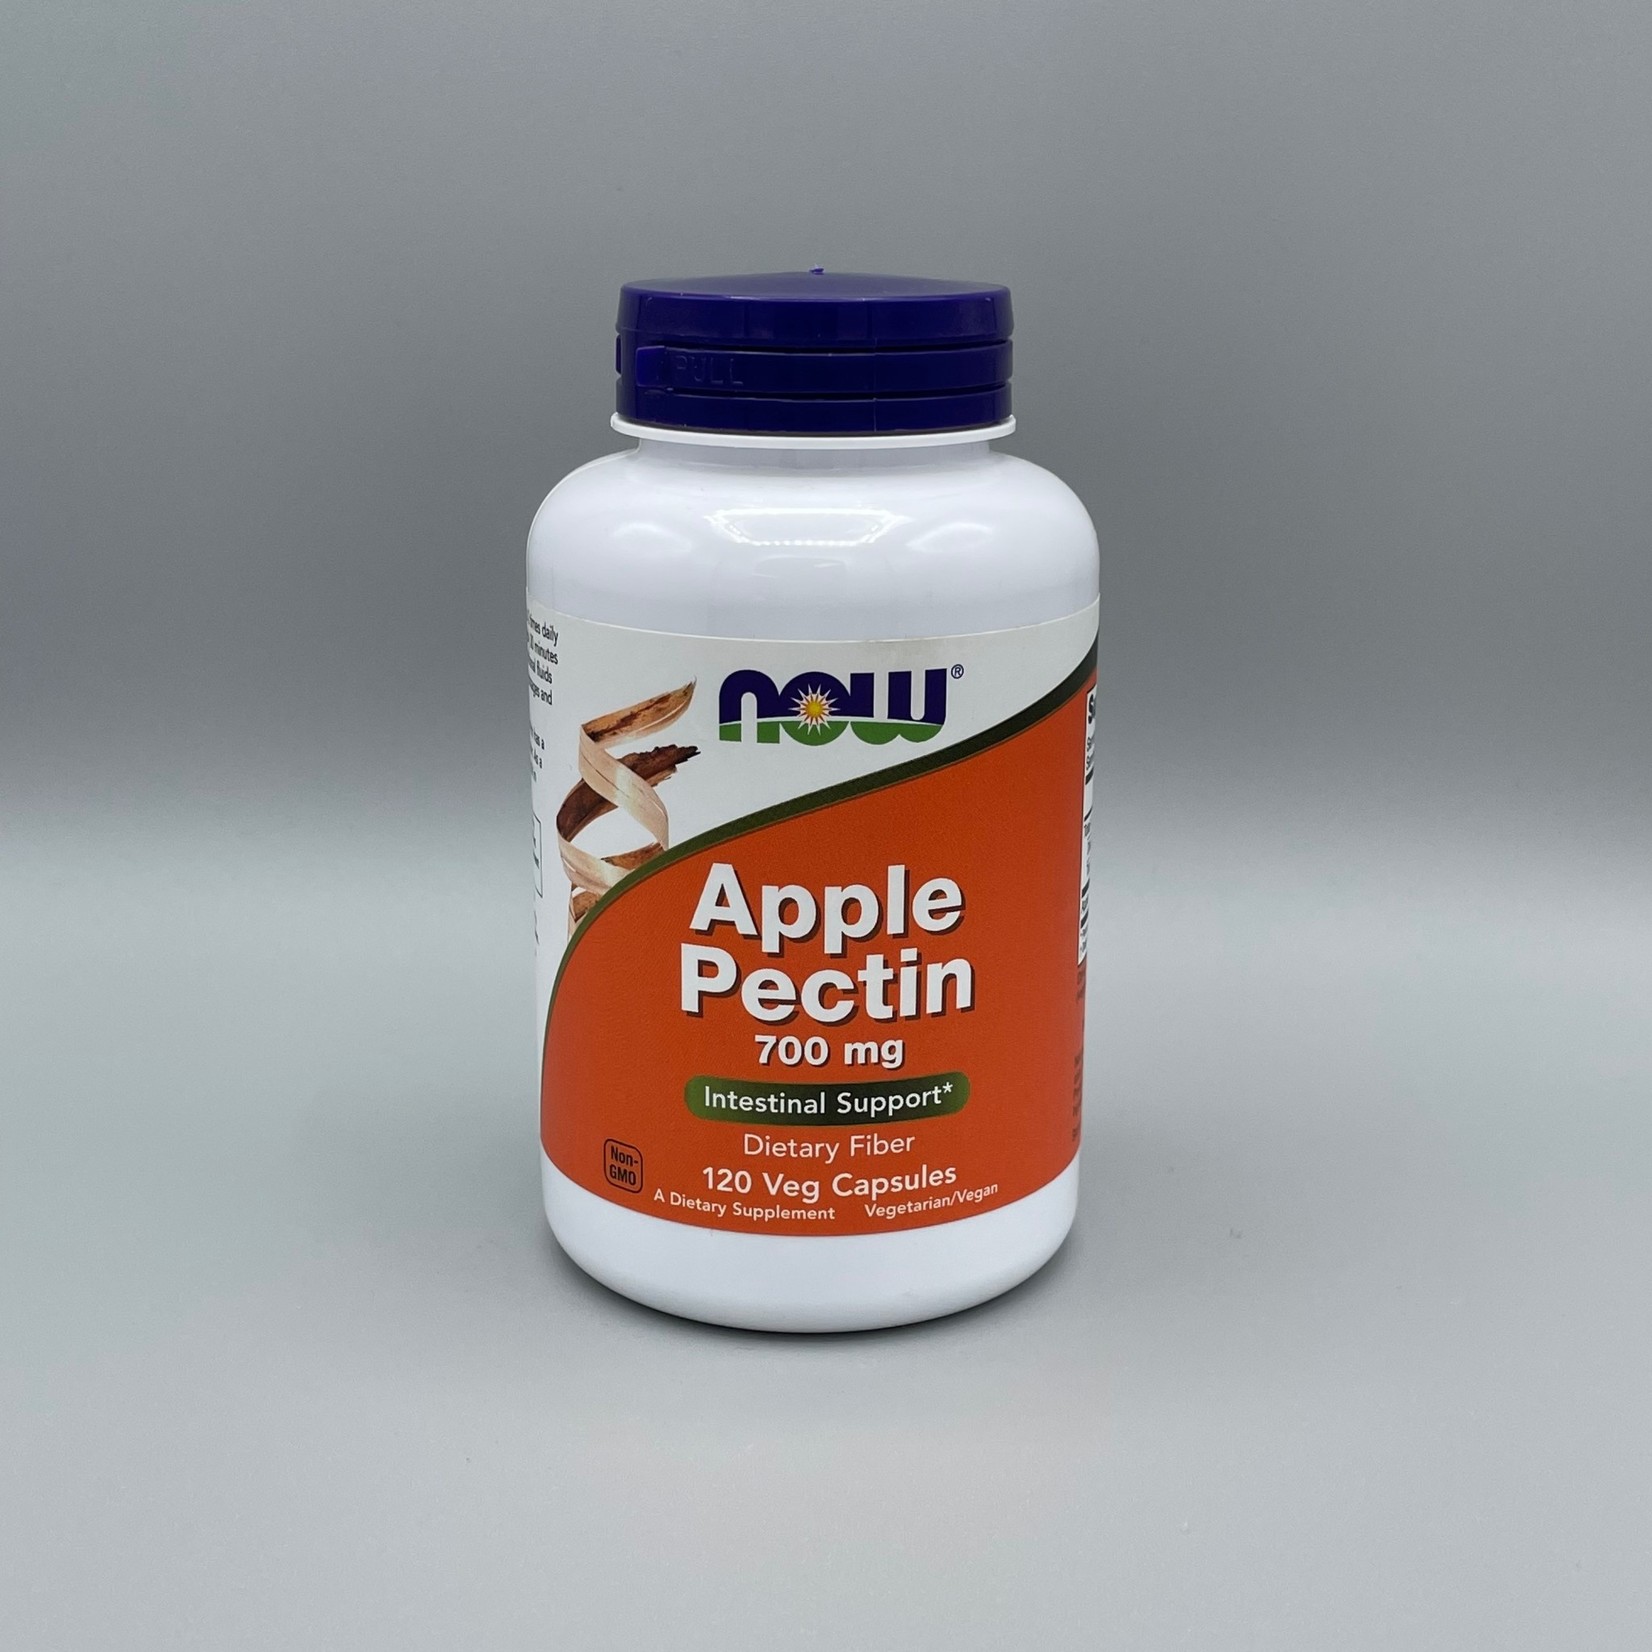 NOW Apple Pectin (Intestinal Support, Dietary Fiber) - 700 mg, 120 Veg. Capsules